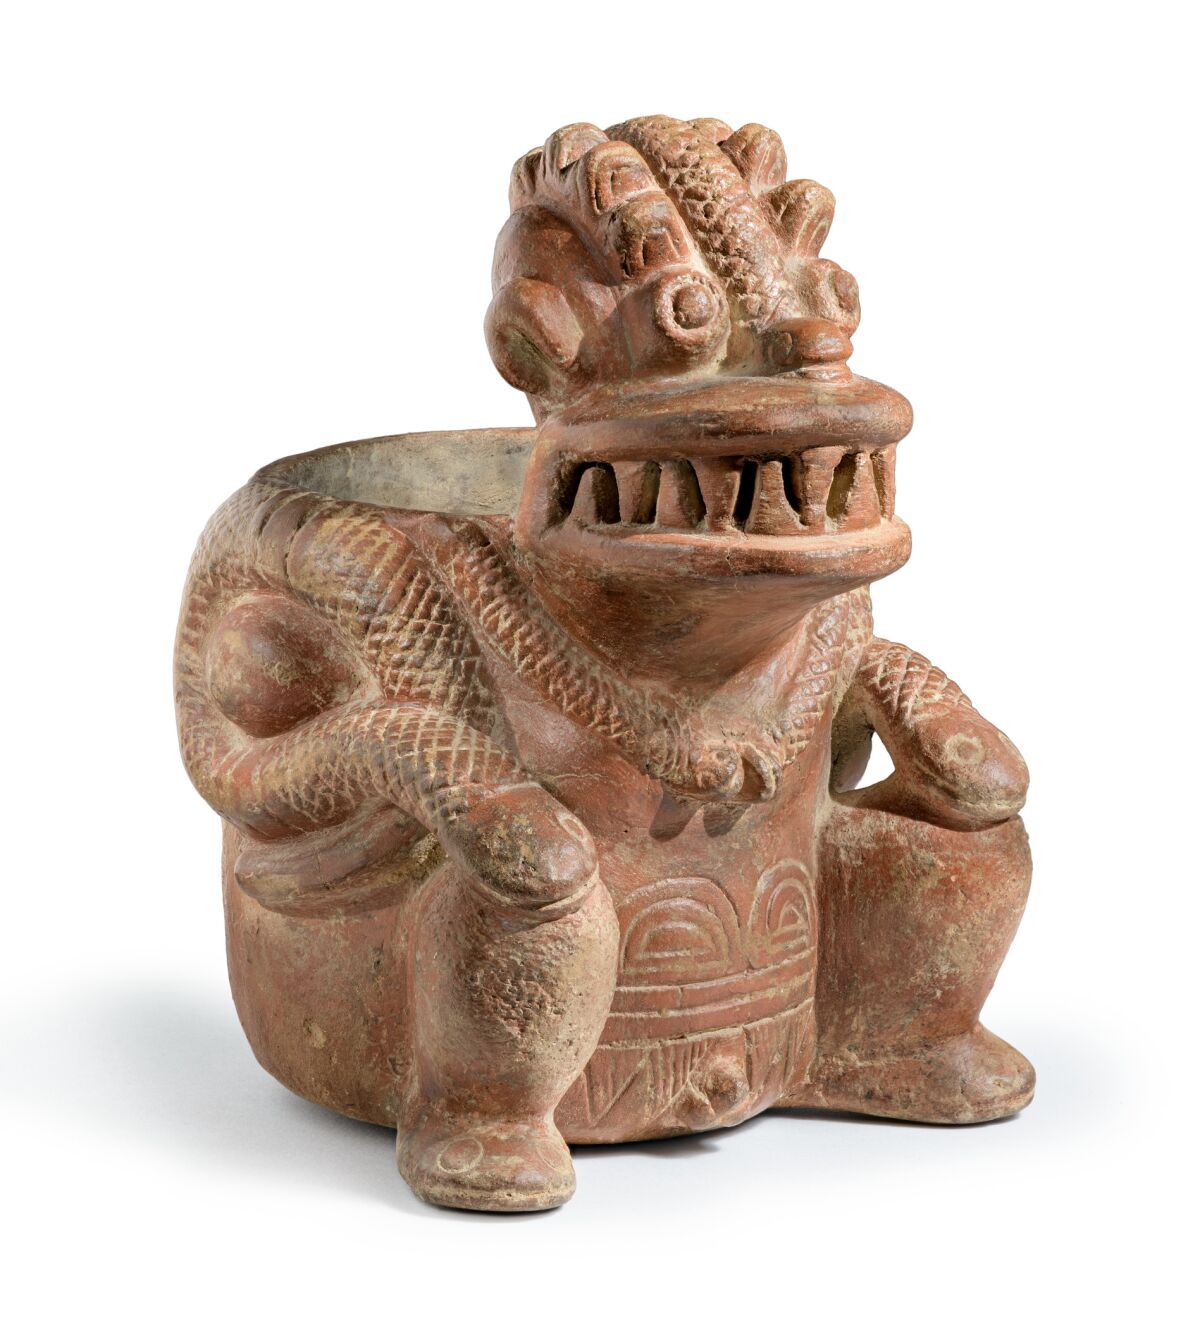 A ceramic figure of a basket-carrier.